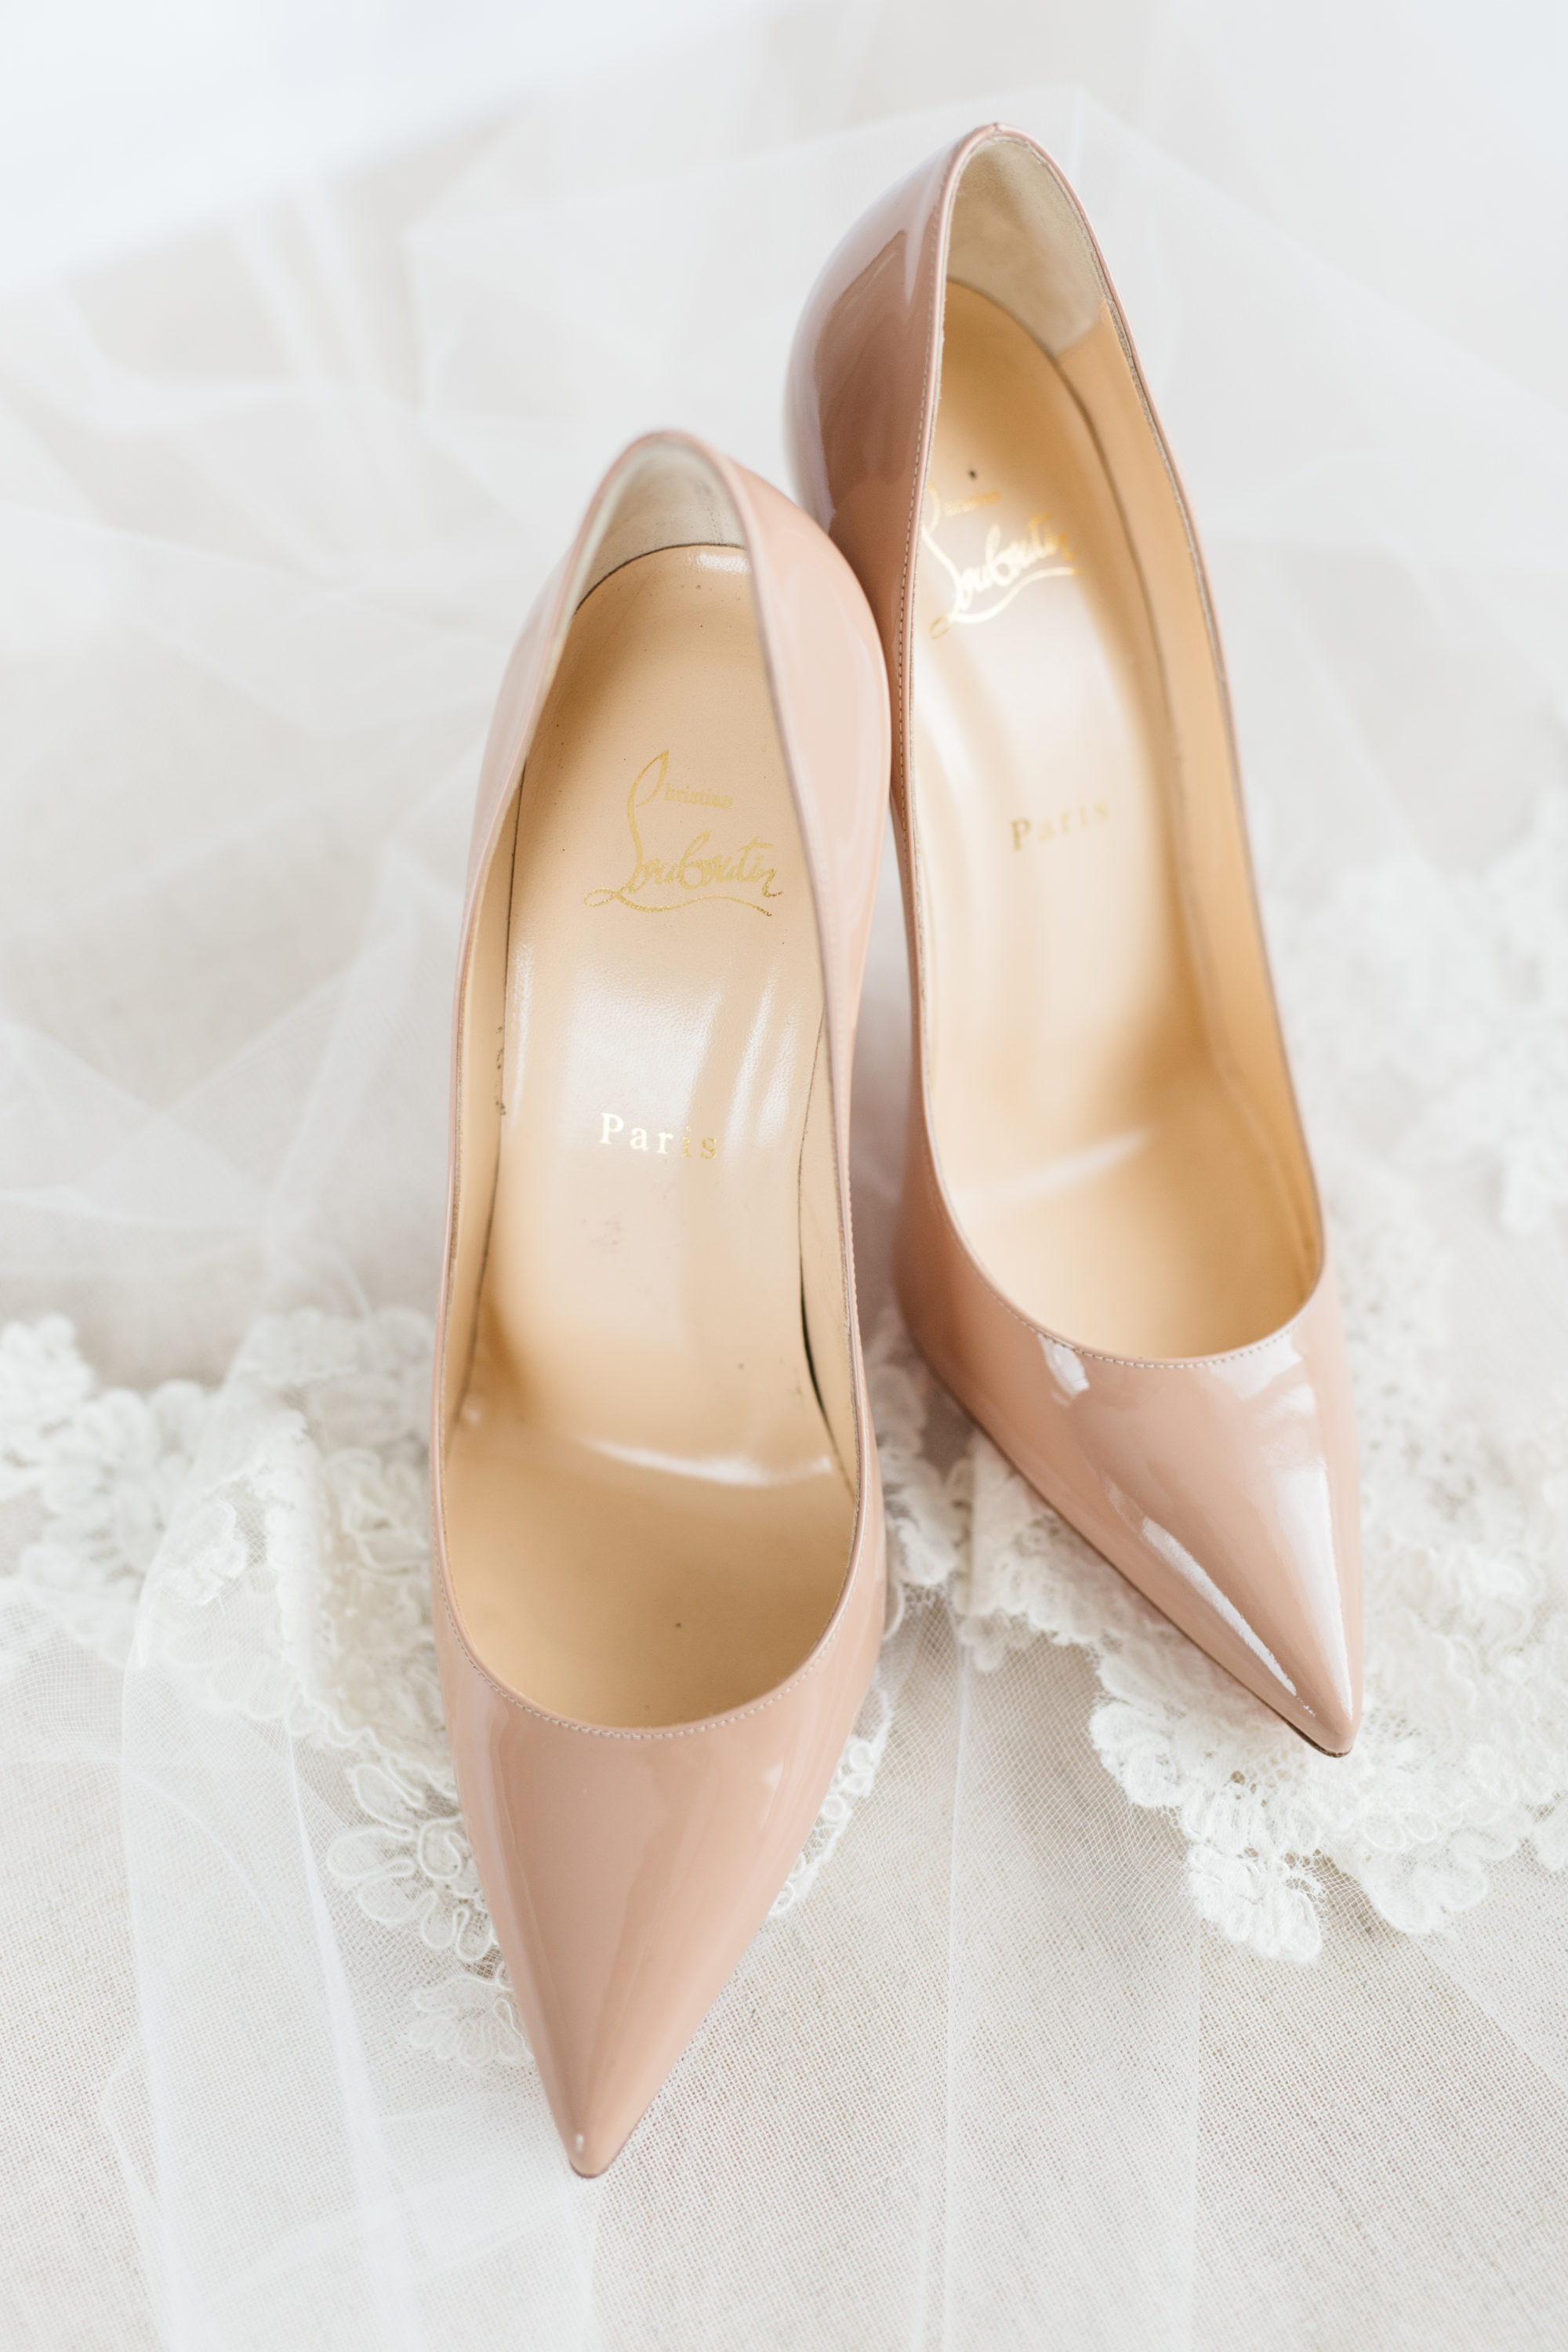 Bride's Louboutin wedding shoes